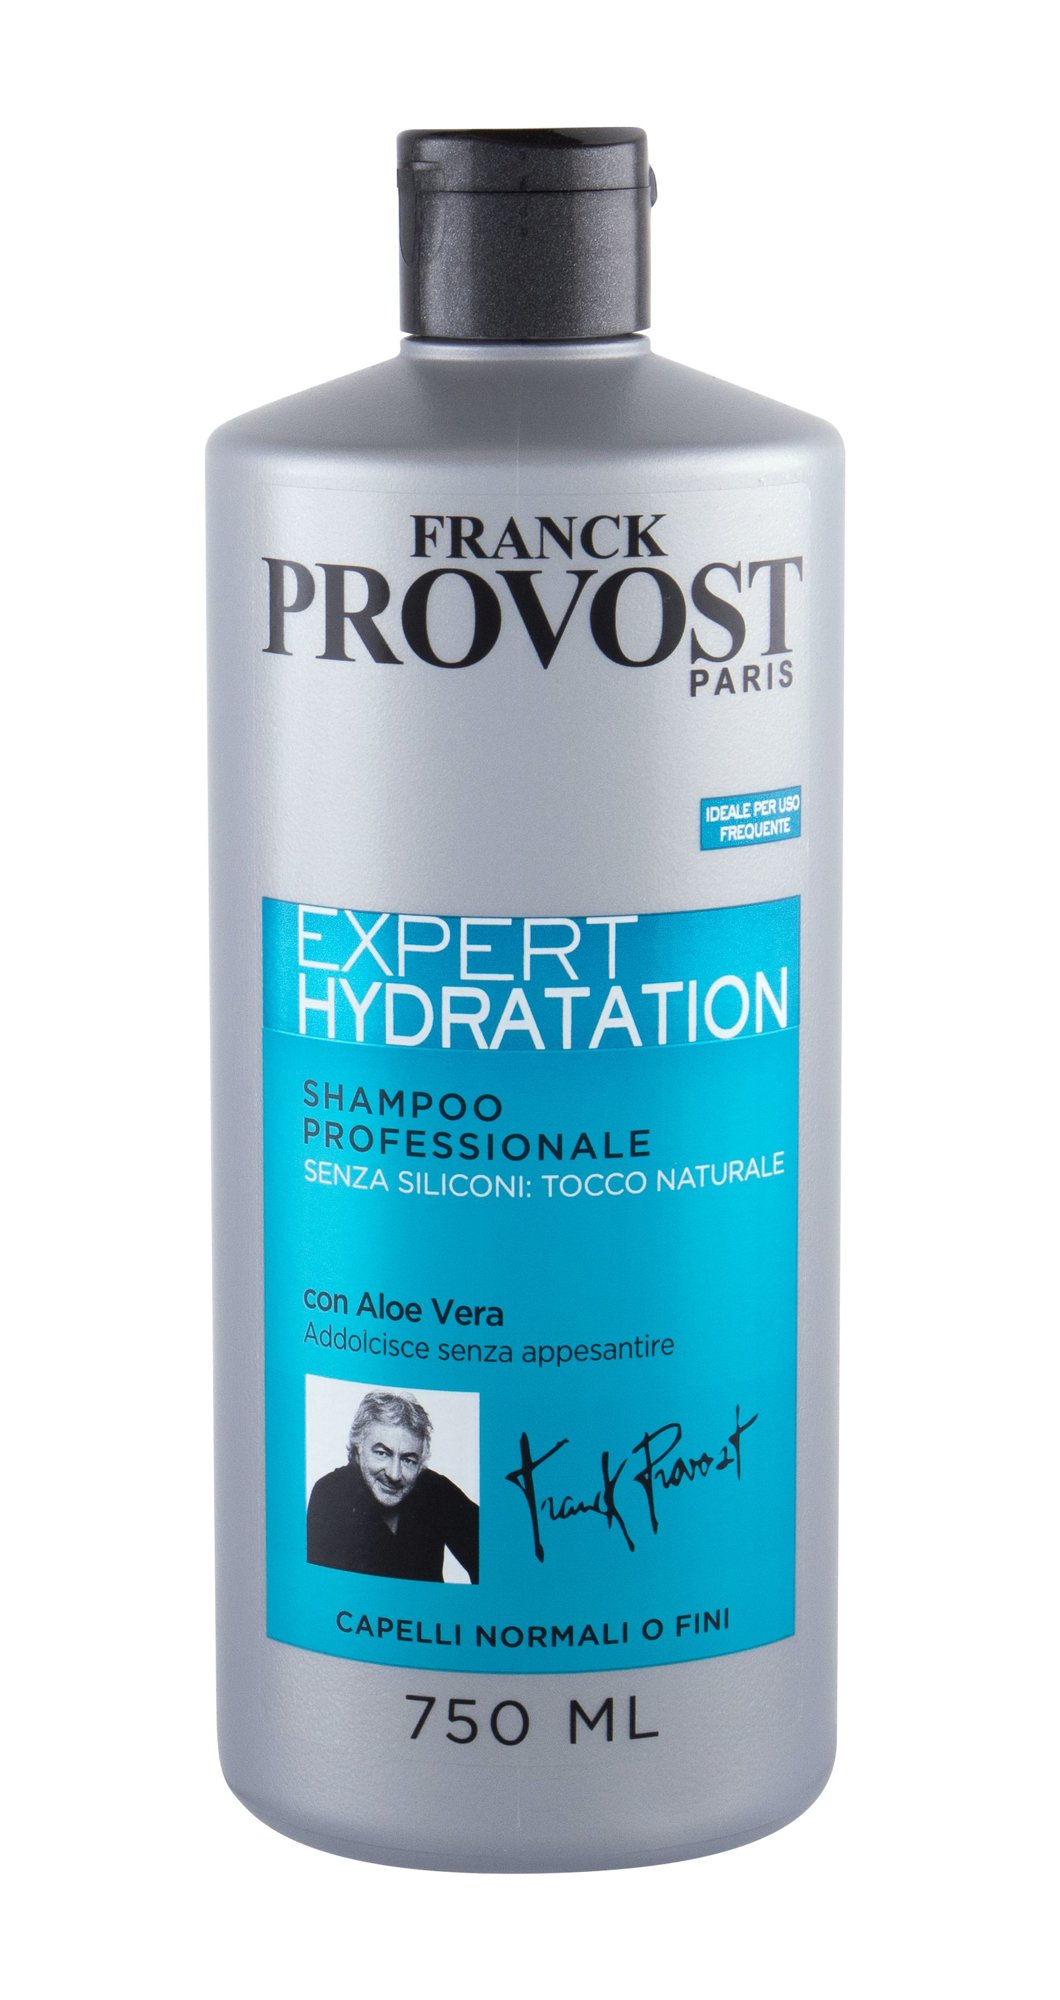 FRANCK PROVOST PARIS Shampoo Professional Hydration 750ml šampūnas